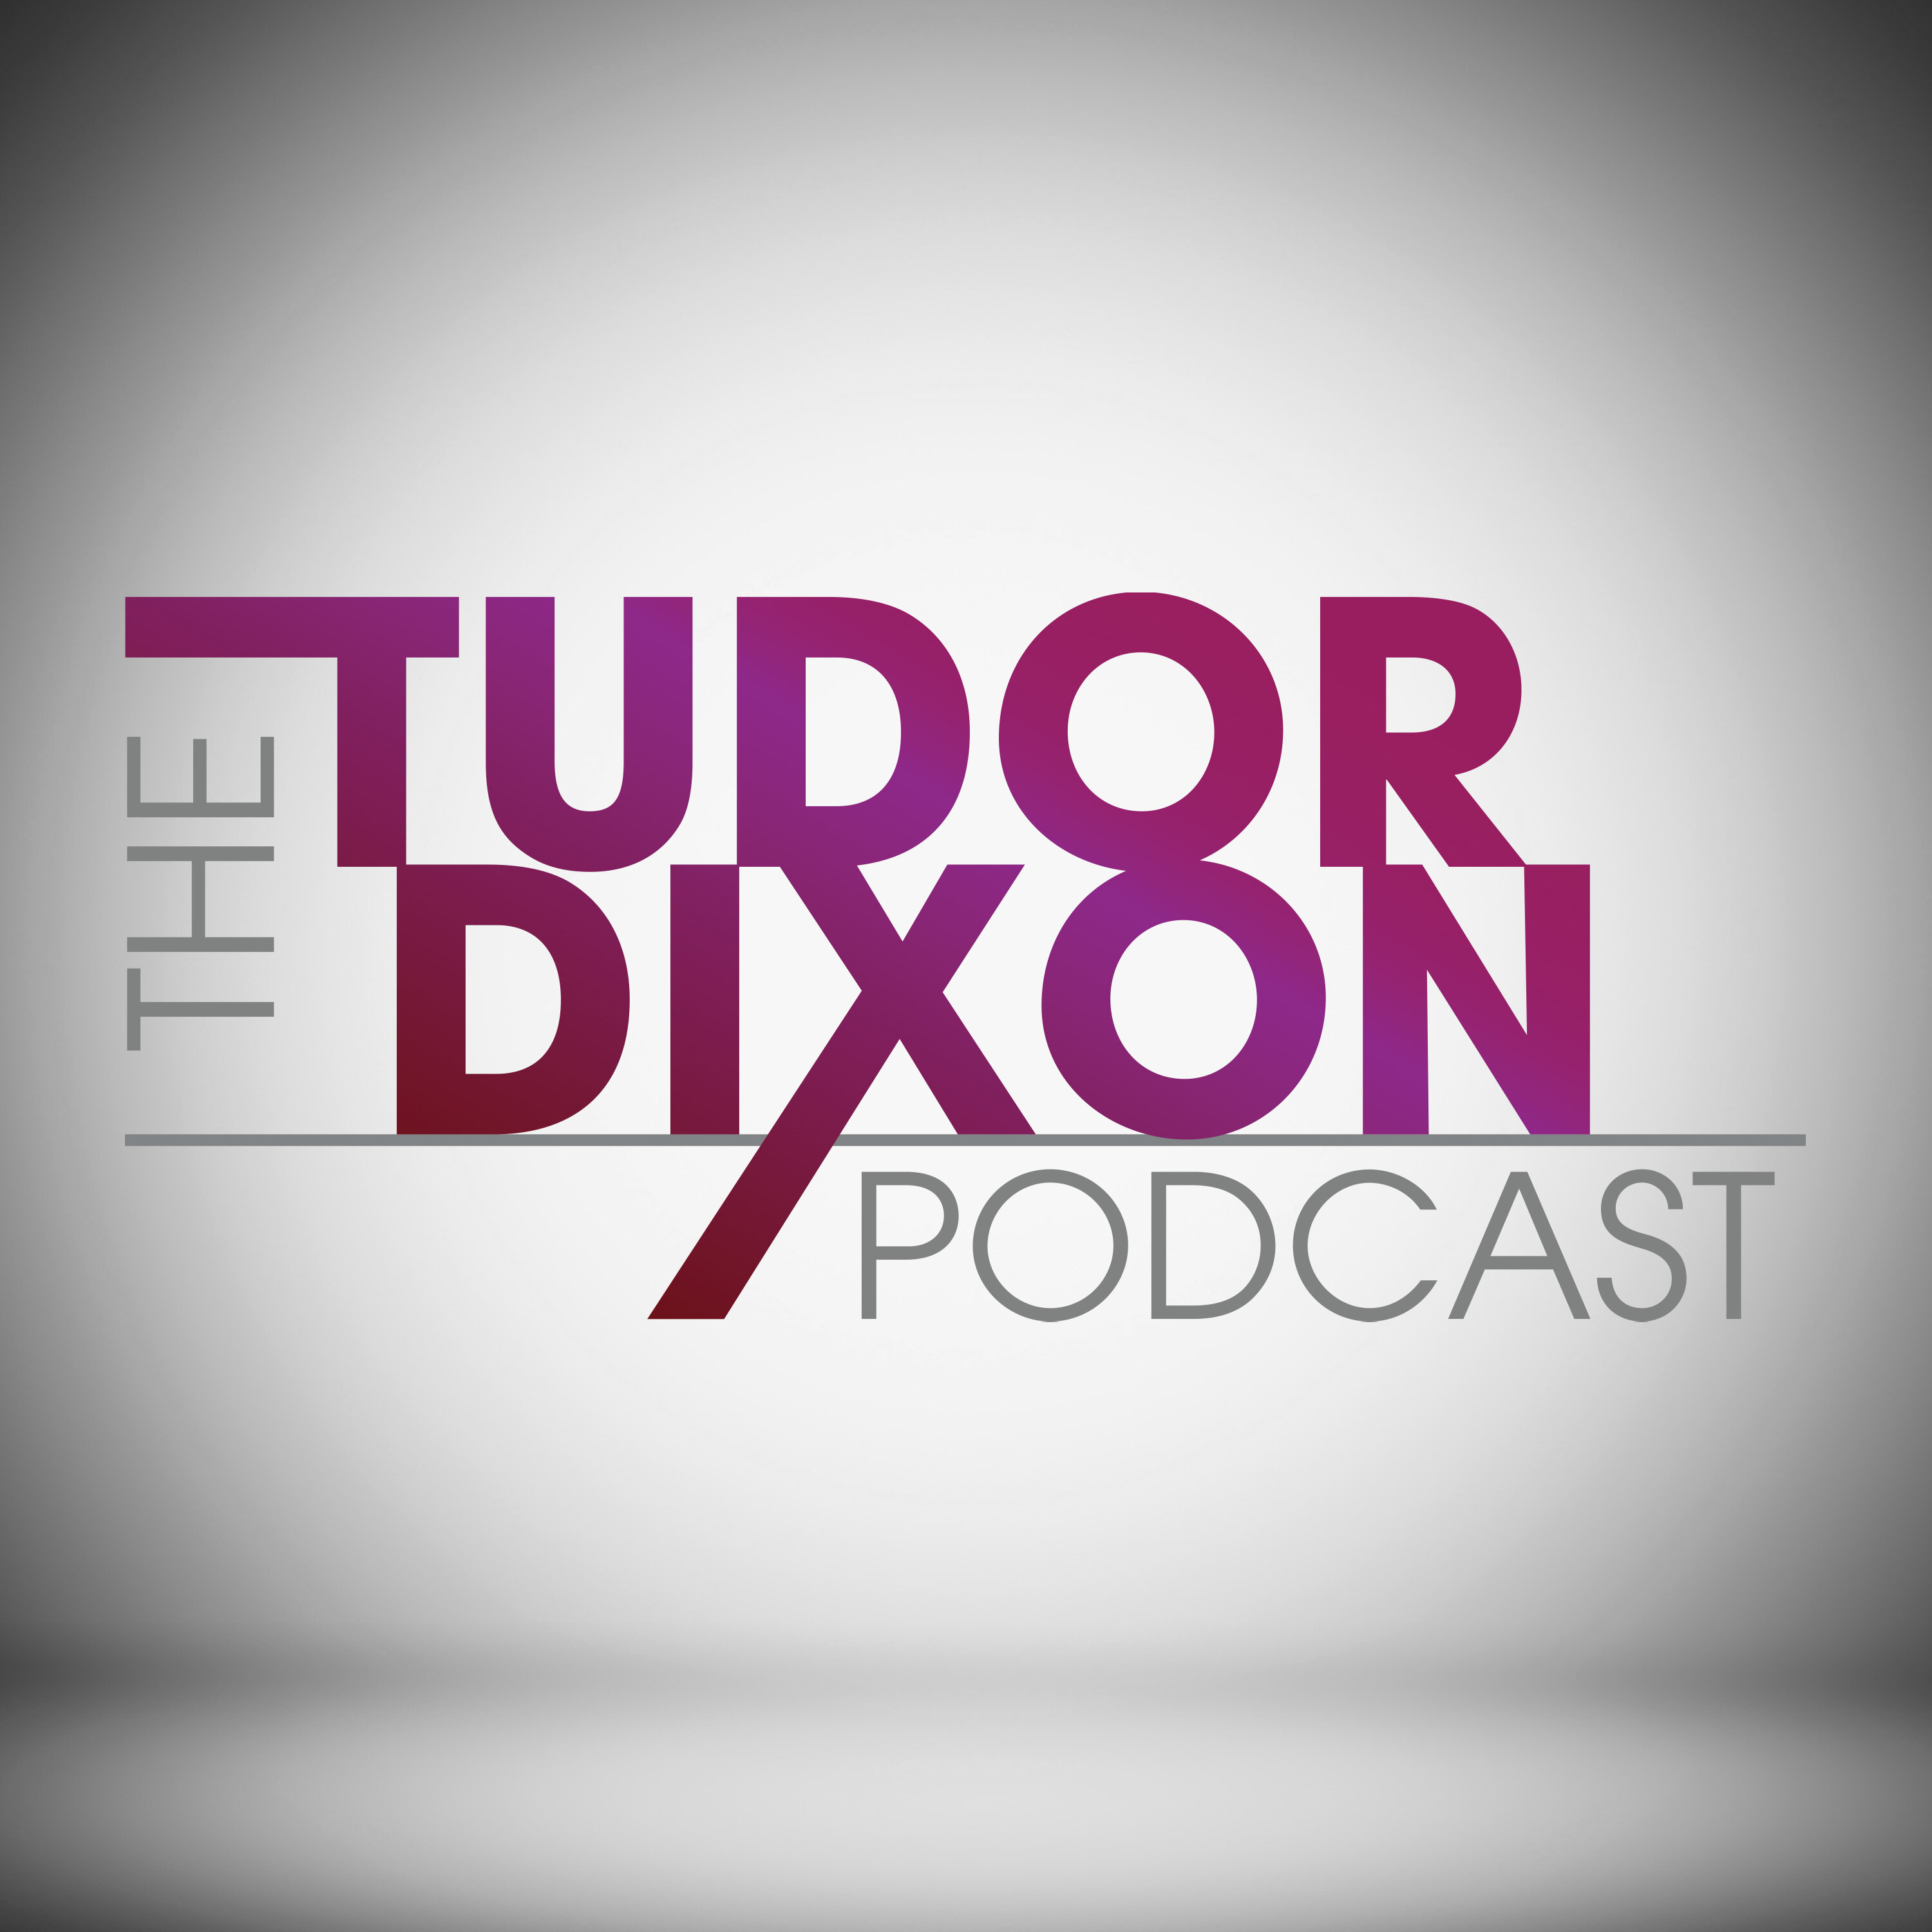 The Tudor Dixon Podcast: Inside the Secret Network of George Soros with Matt Palumbo